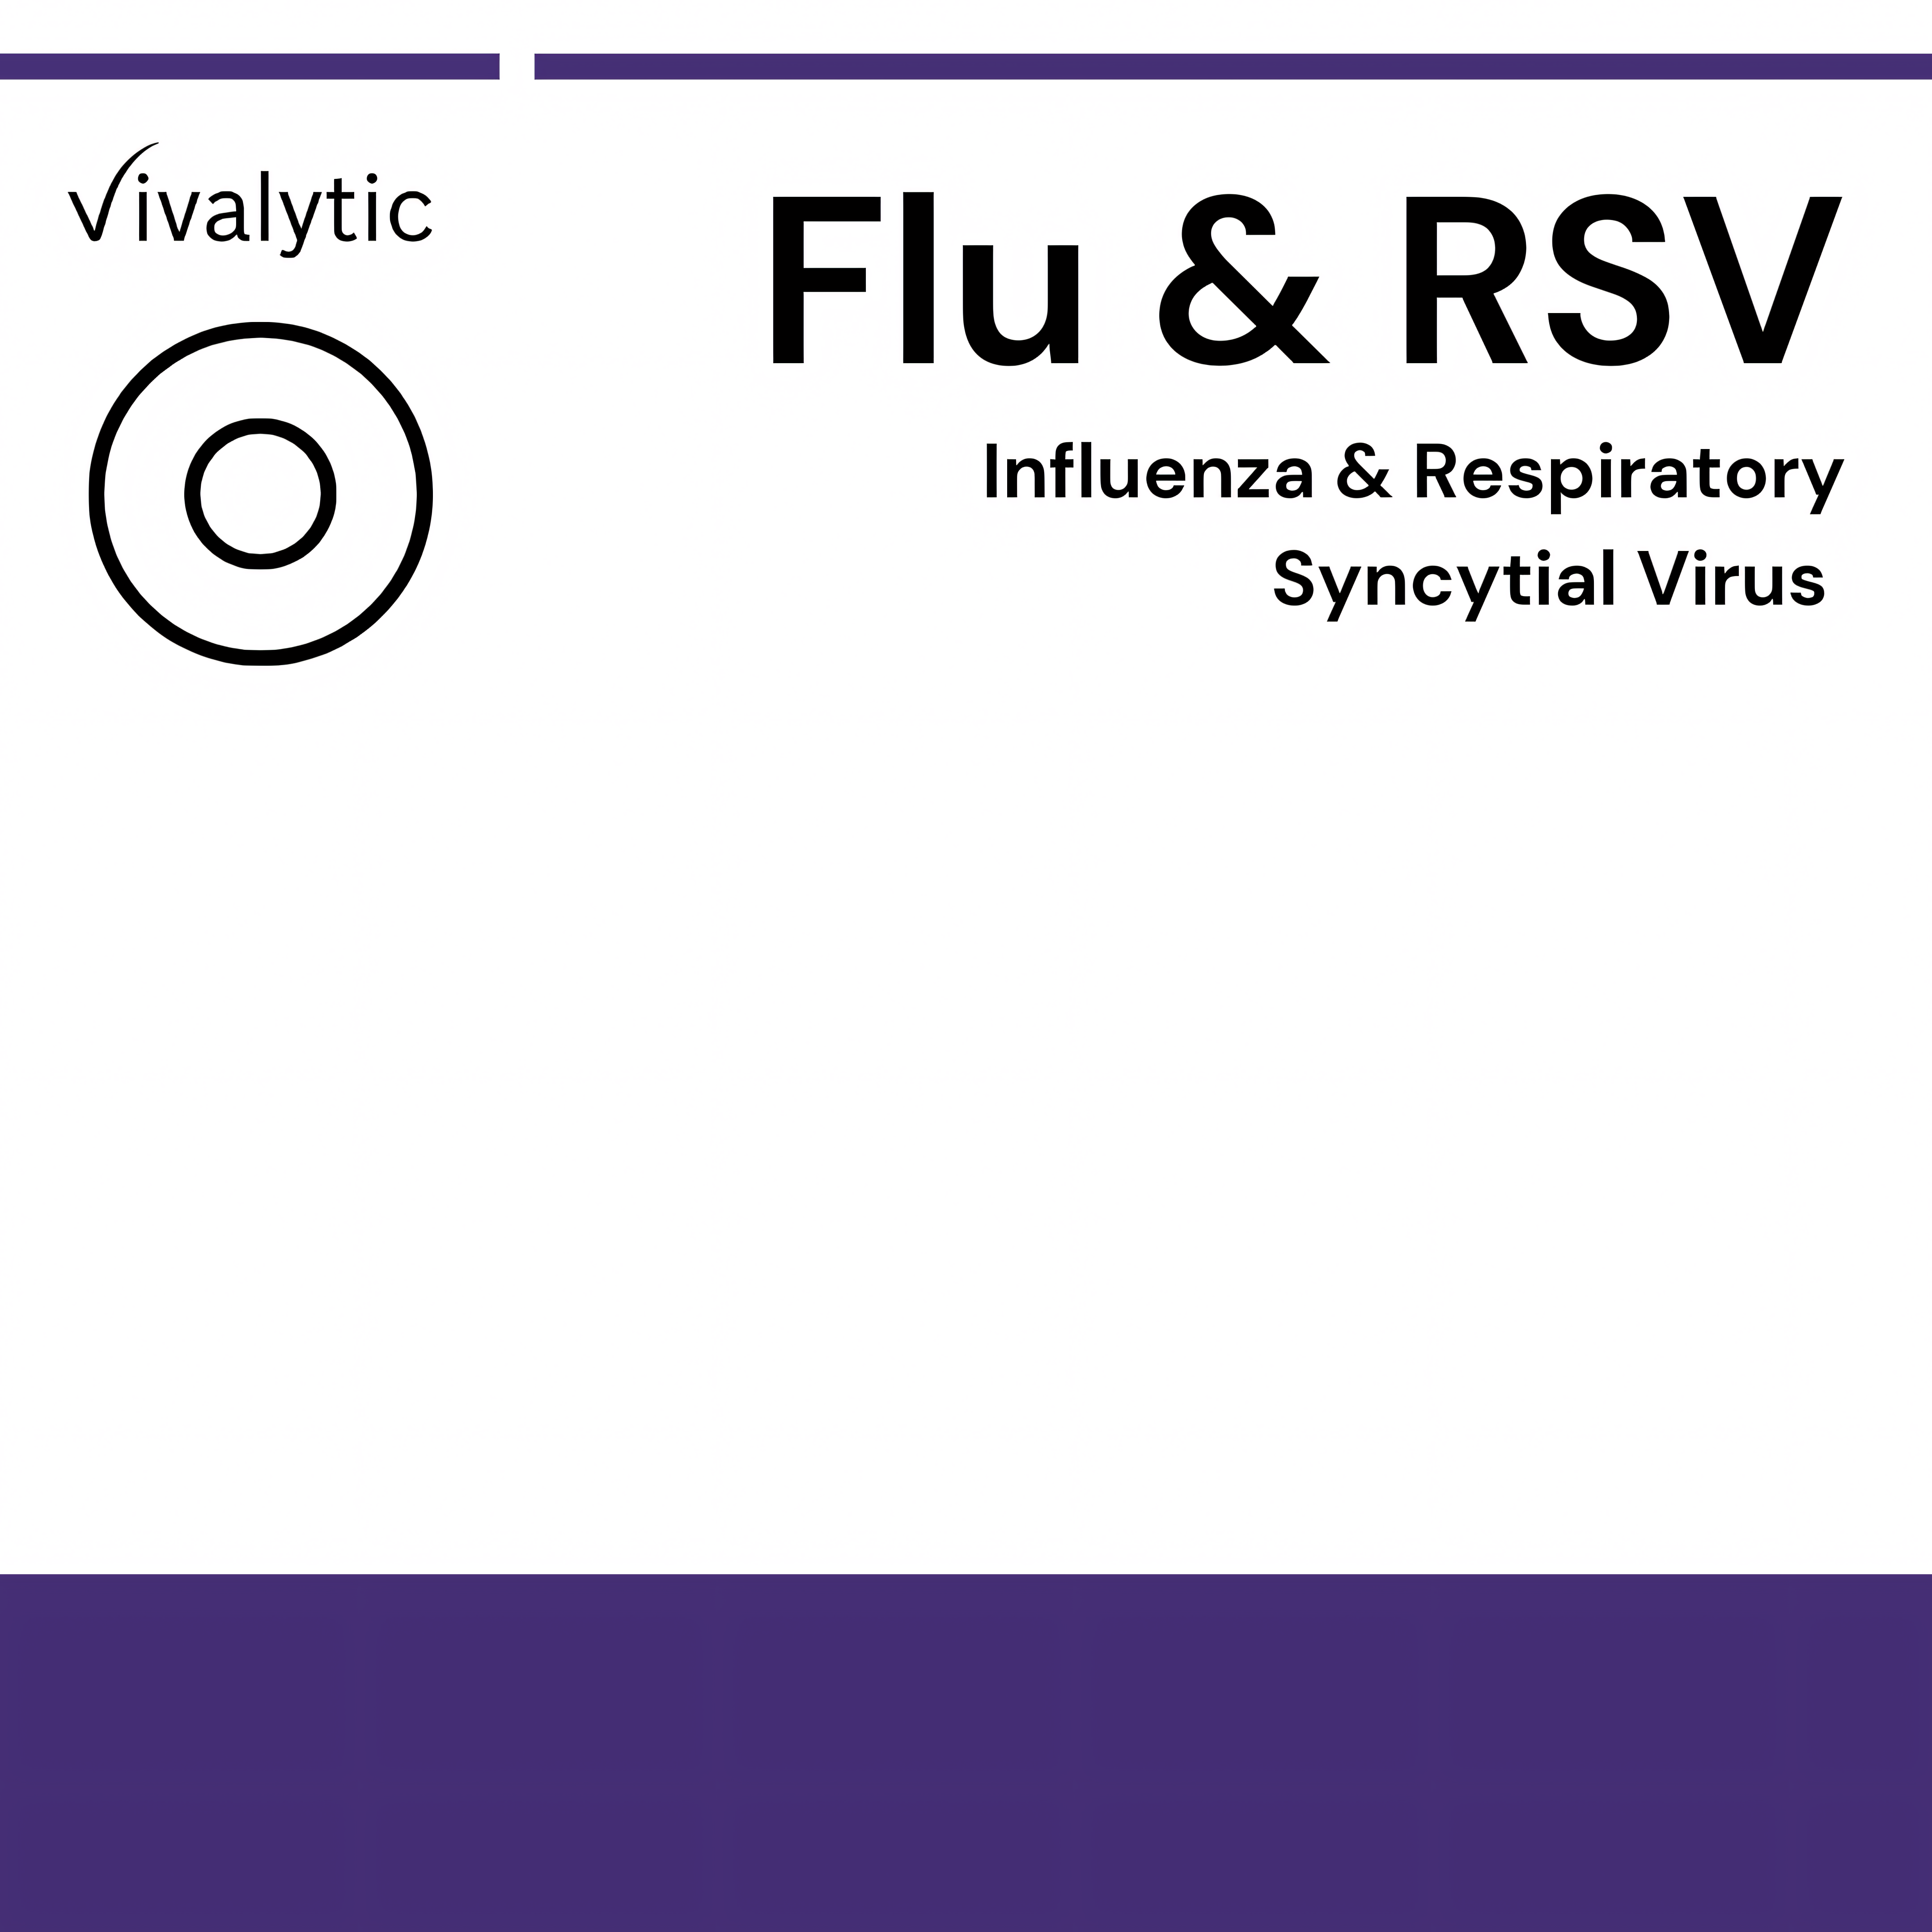 Flu & RSV Infections